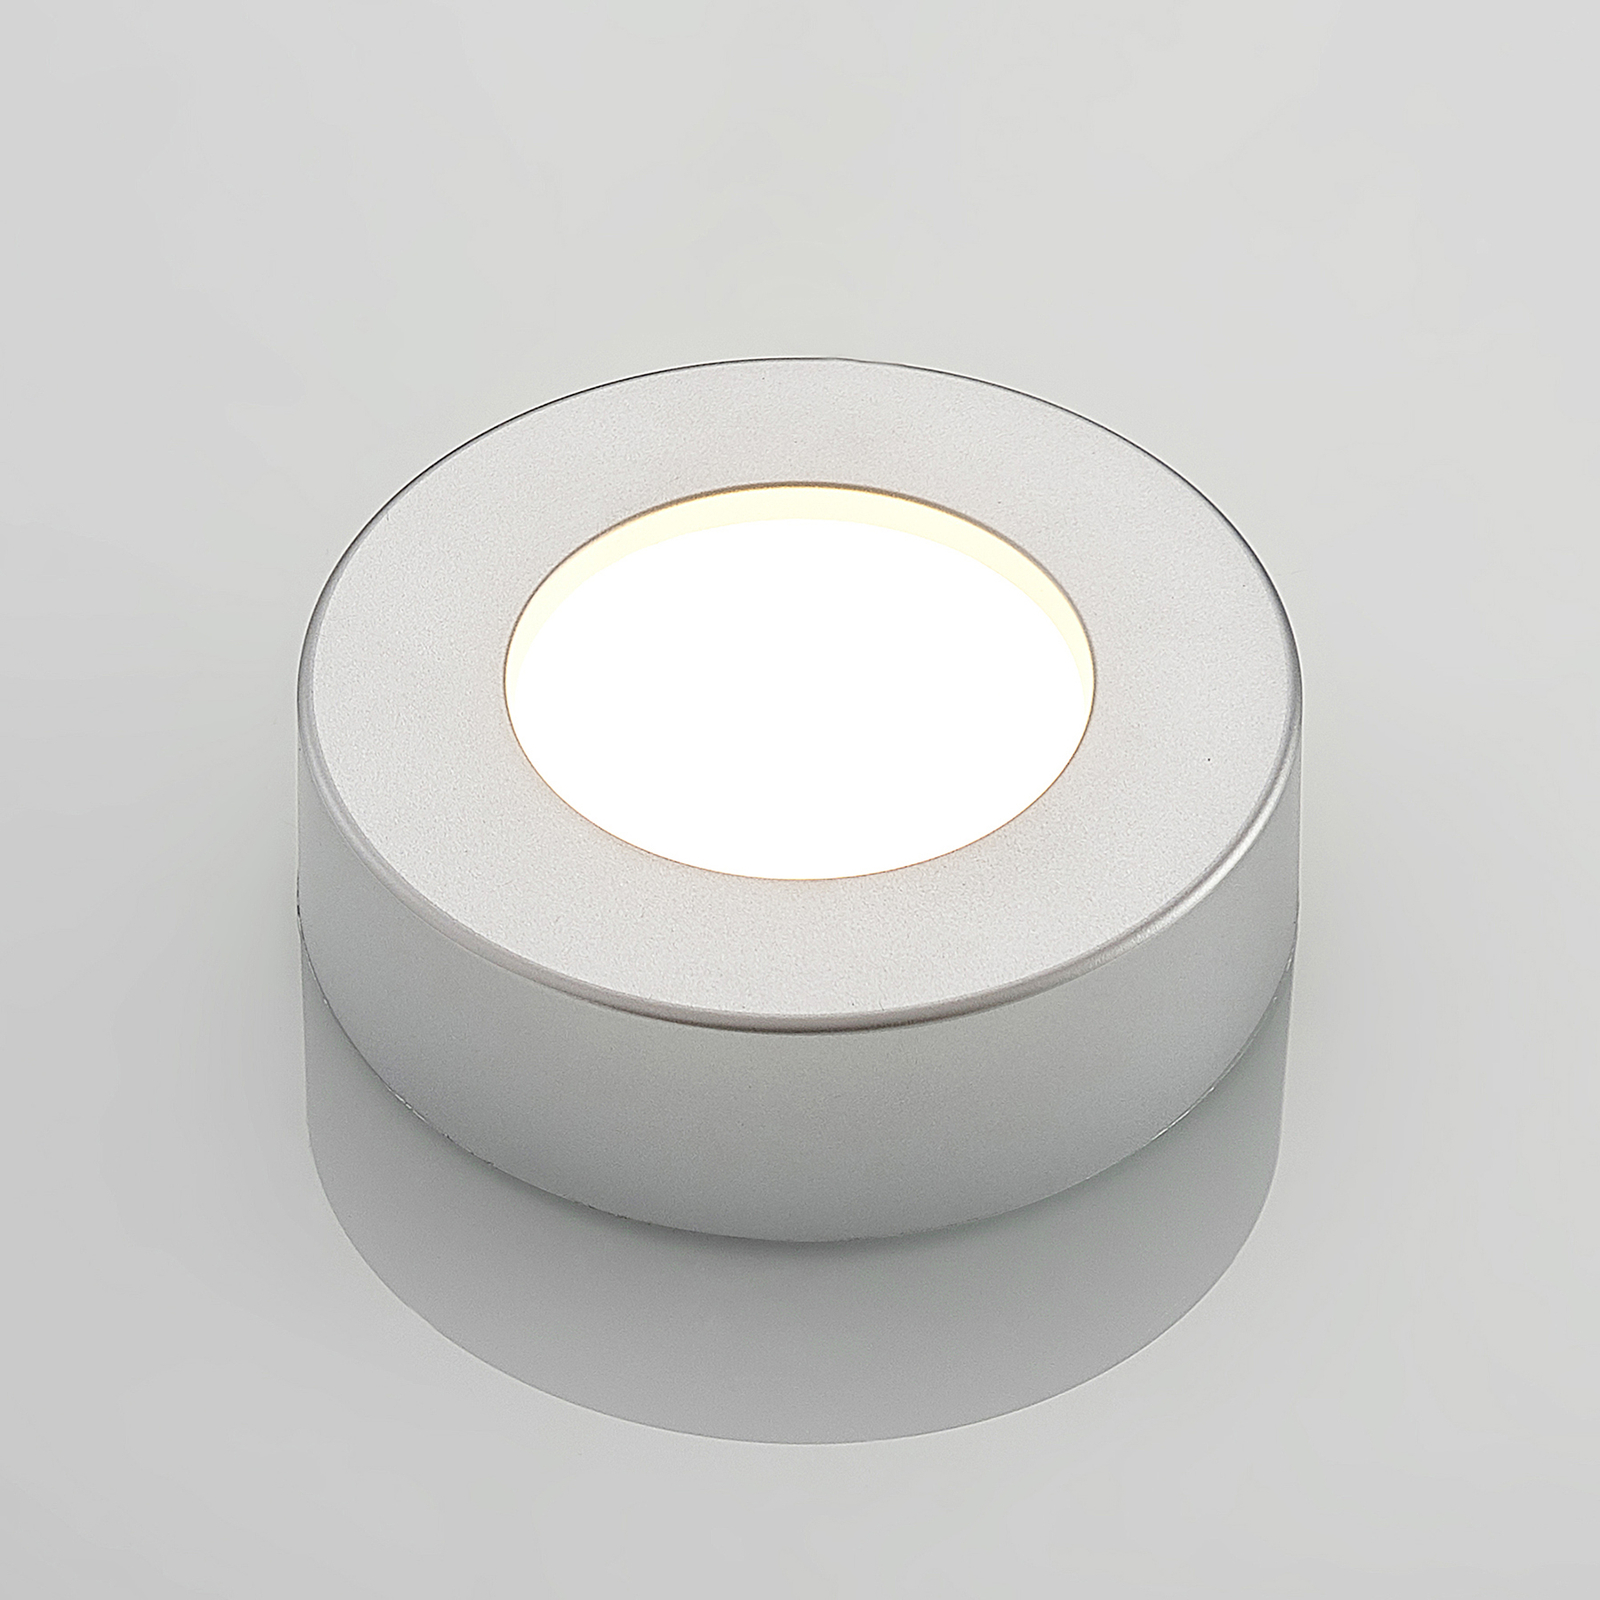 Prios Edwina-LED-kattovalaisin hopea, 12,2cm 2 kpl